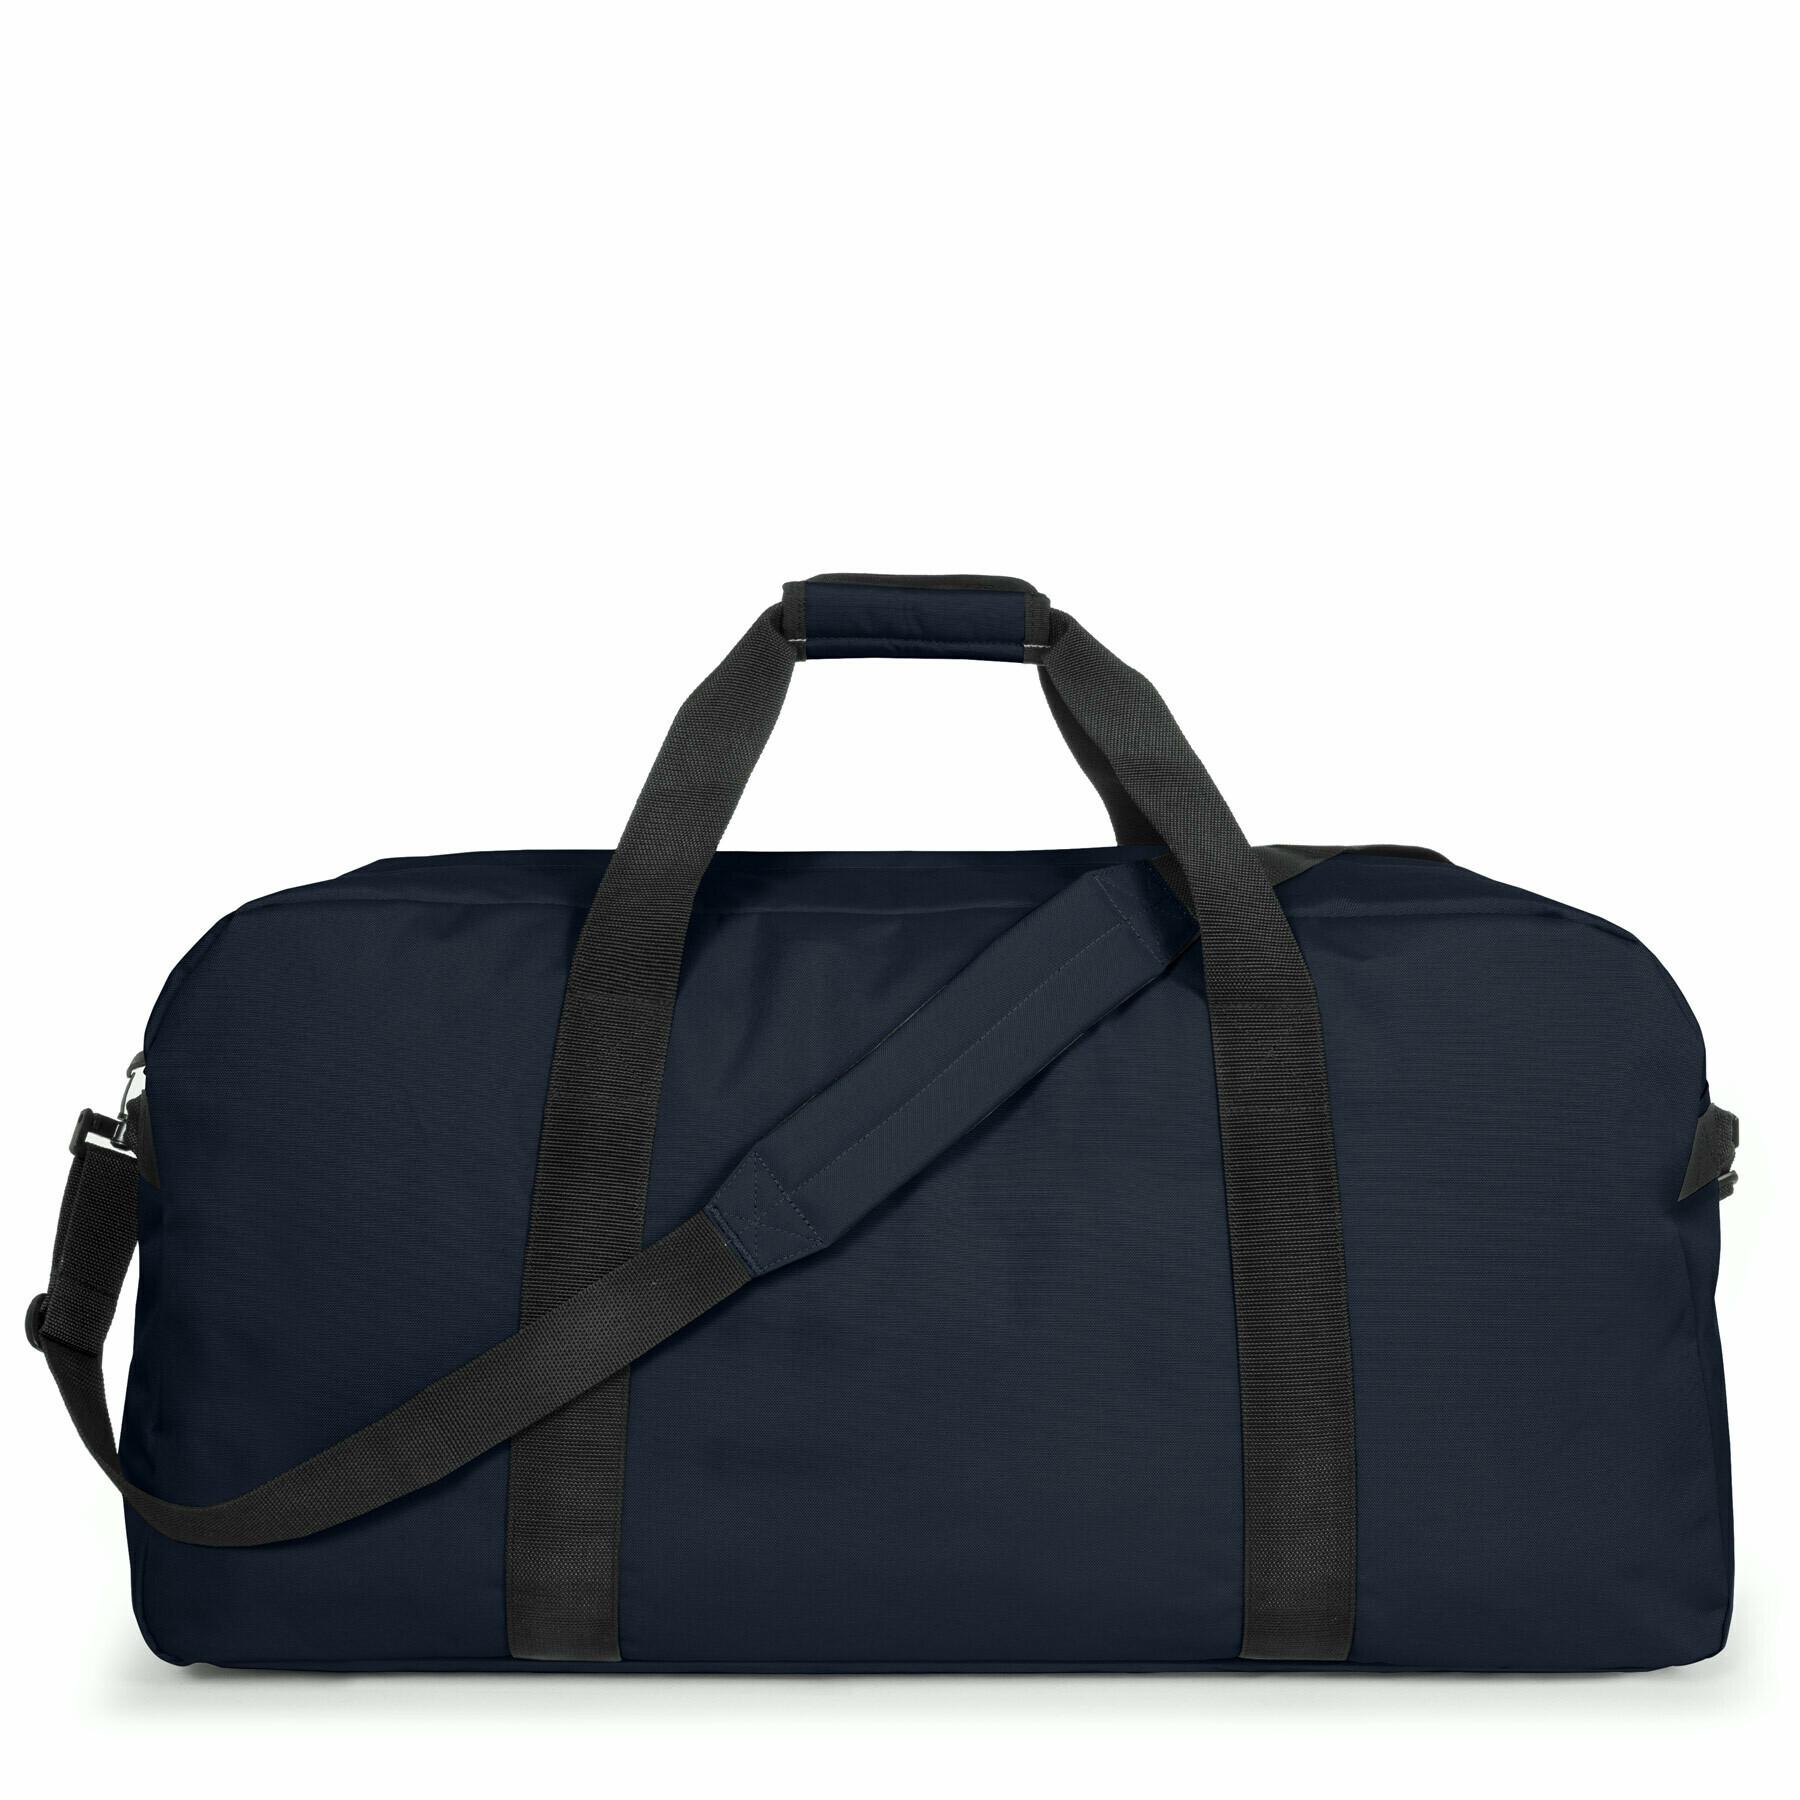 Travel bag Eastpak Terminal +